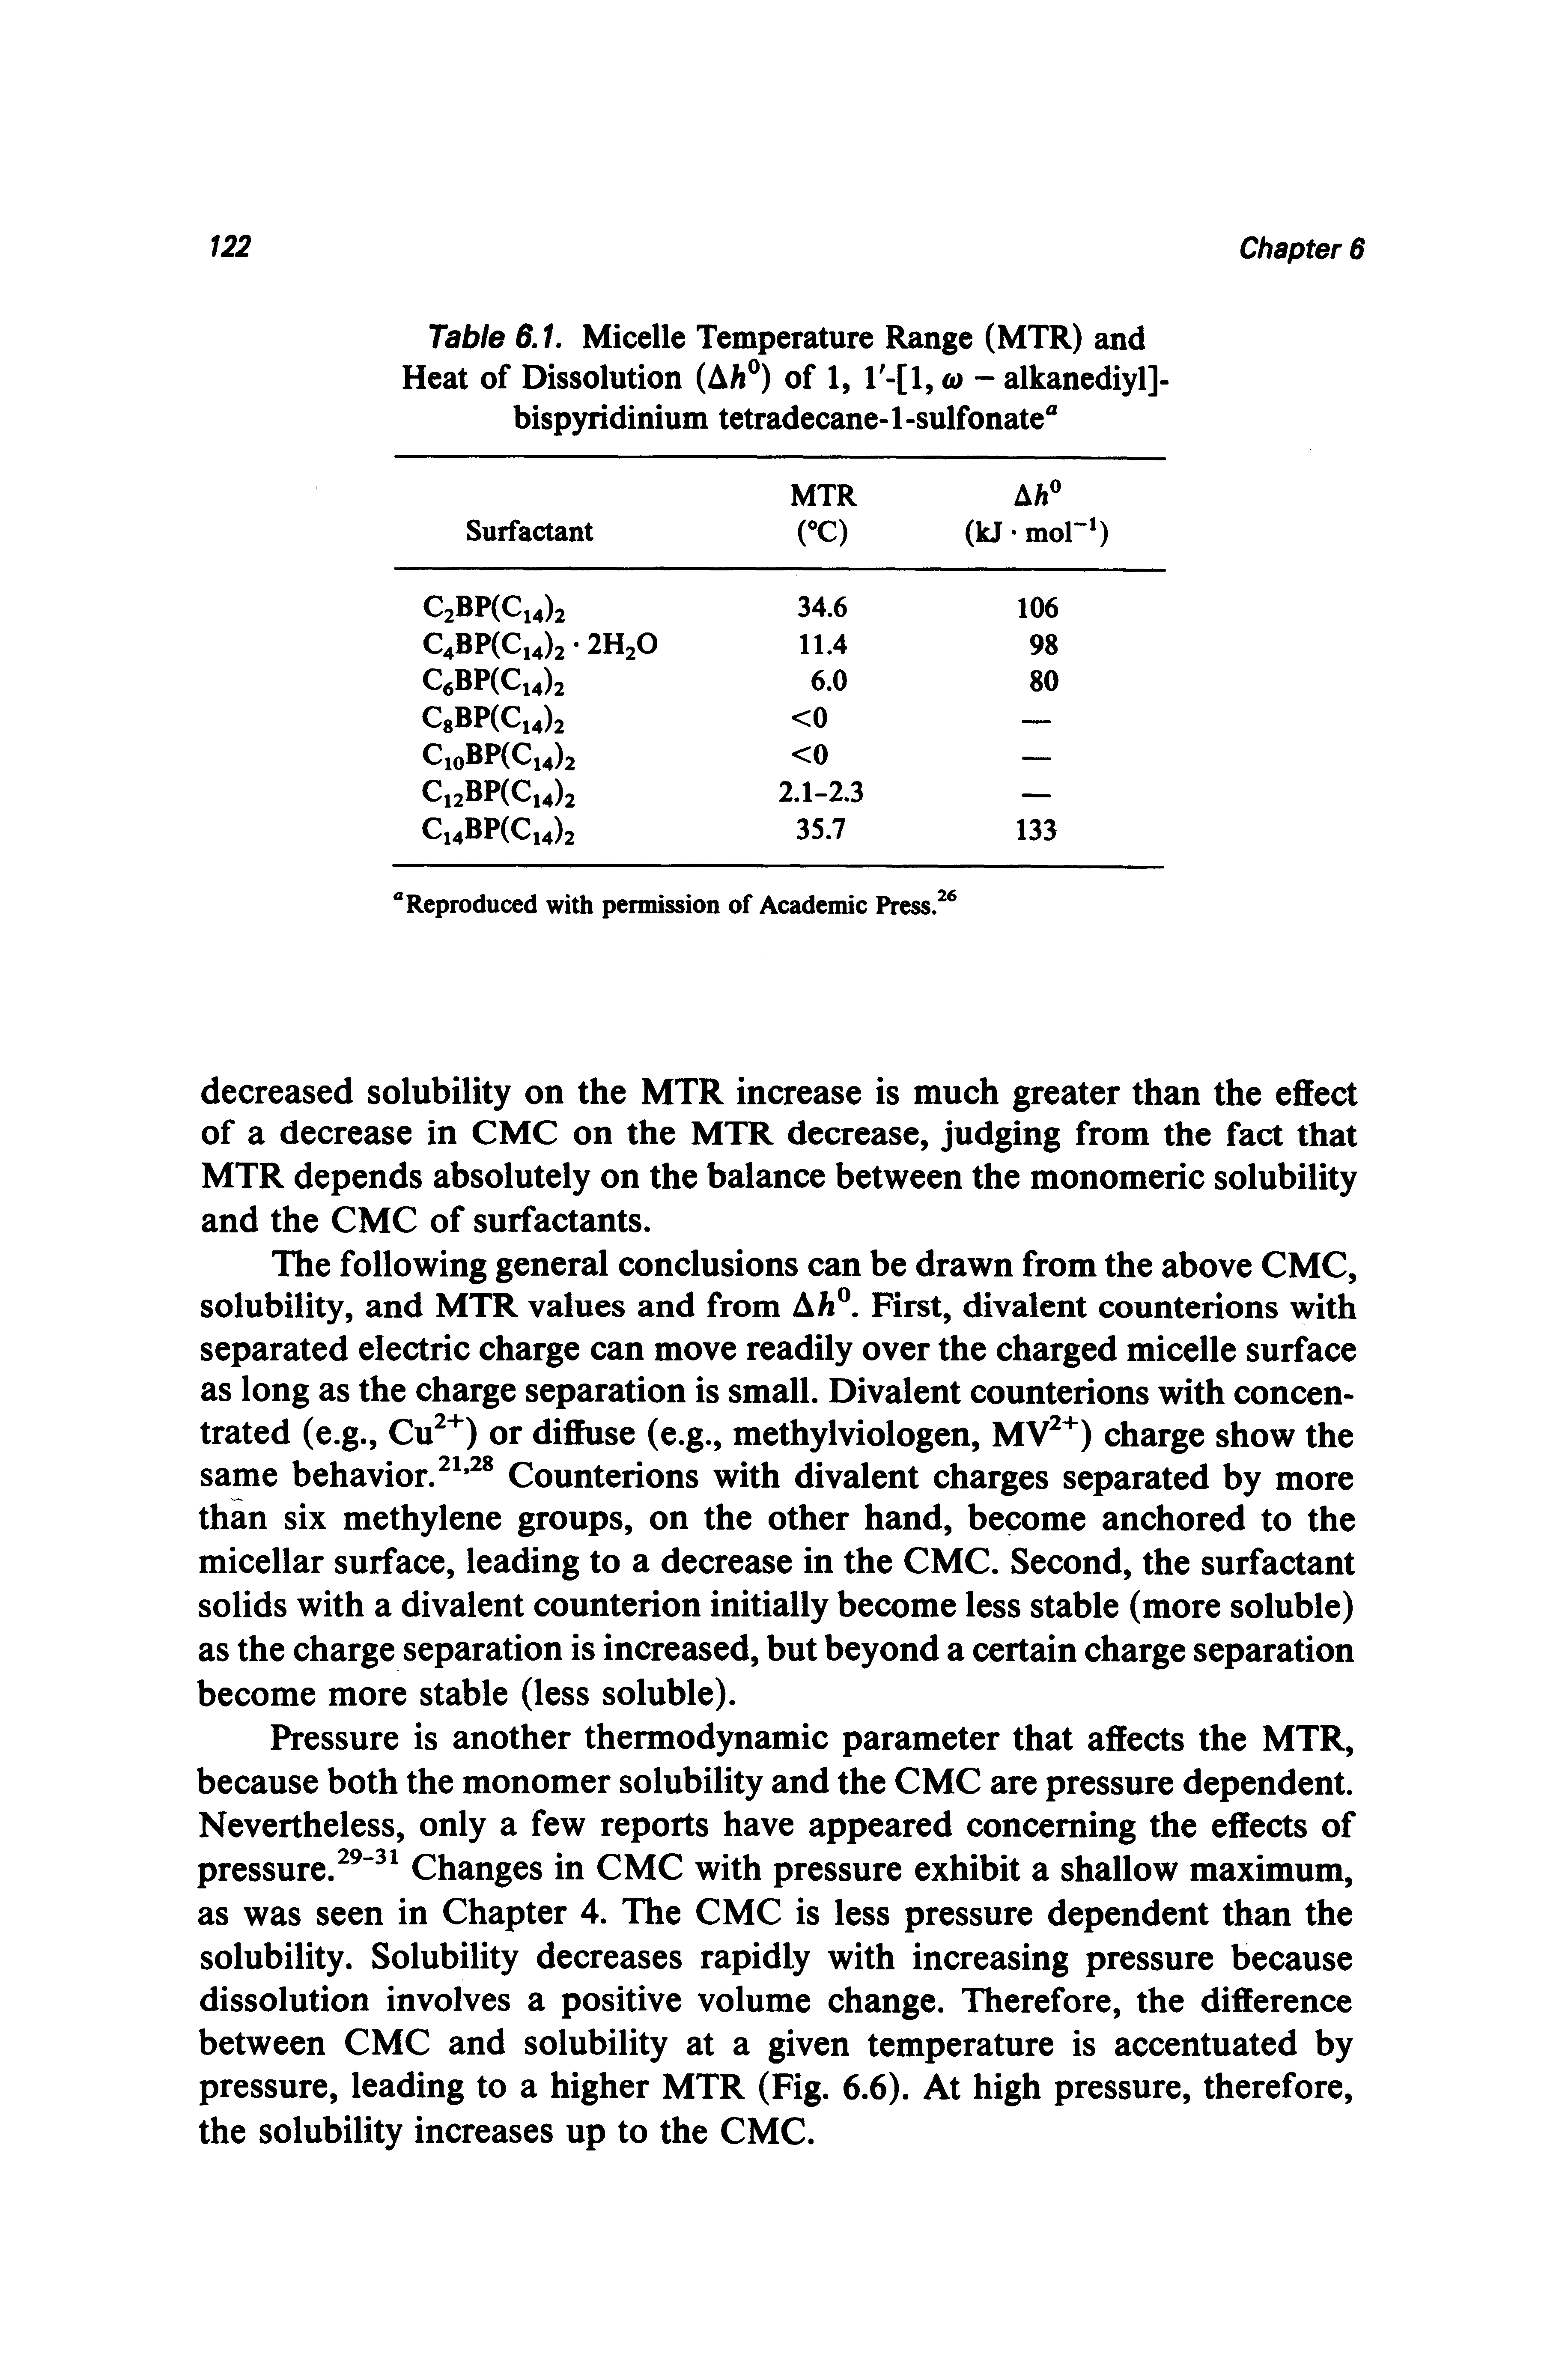 Table 6.1. Micelle Temperature Range (MTR) and Heat of Dissolution (All ) of 1, T-[l, <u - alkanediyl]-bispyridinium tetradecane-1 -sulfonate ...